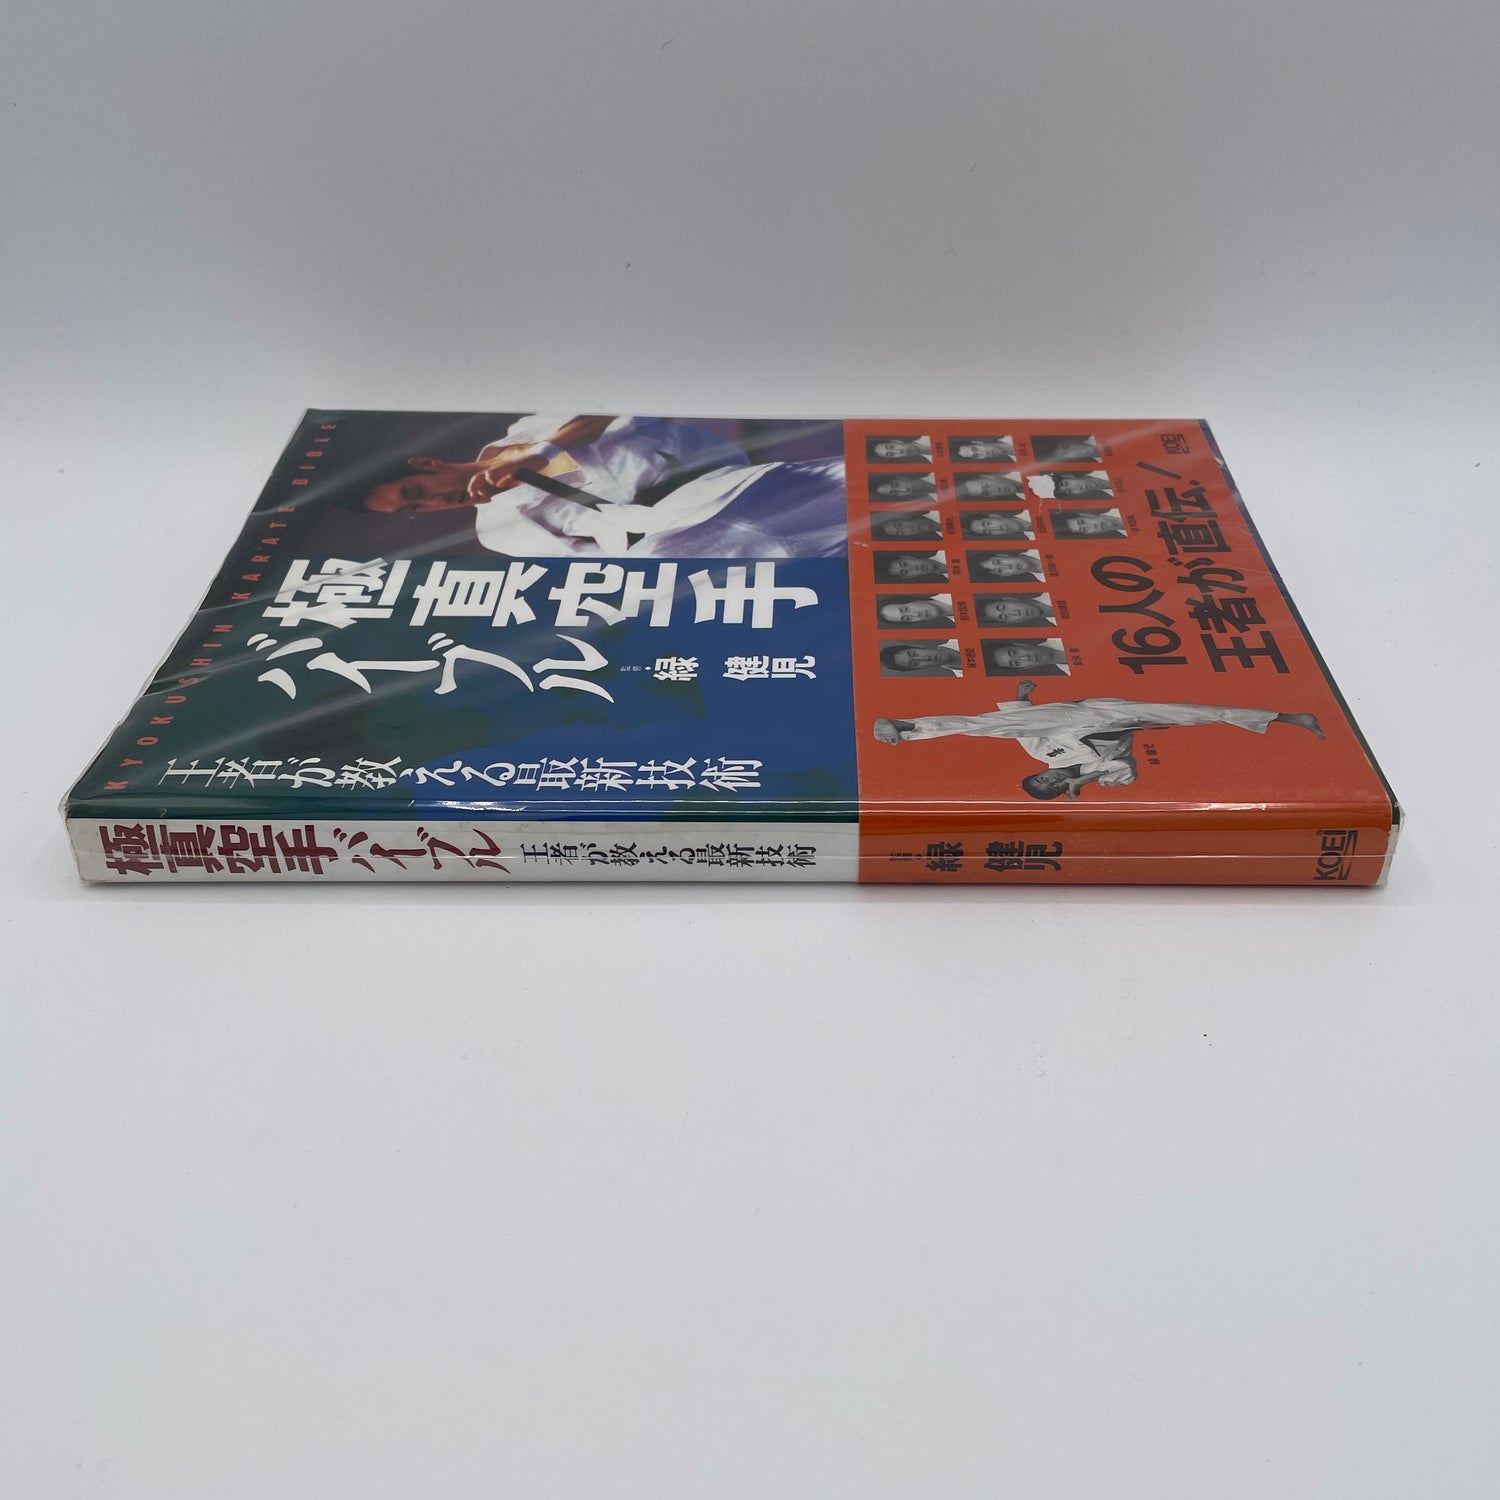 Kyokushin Karate Bible by Kenji Midori (Preowned)